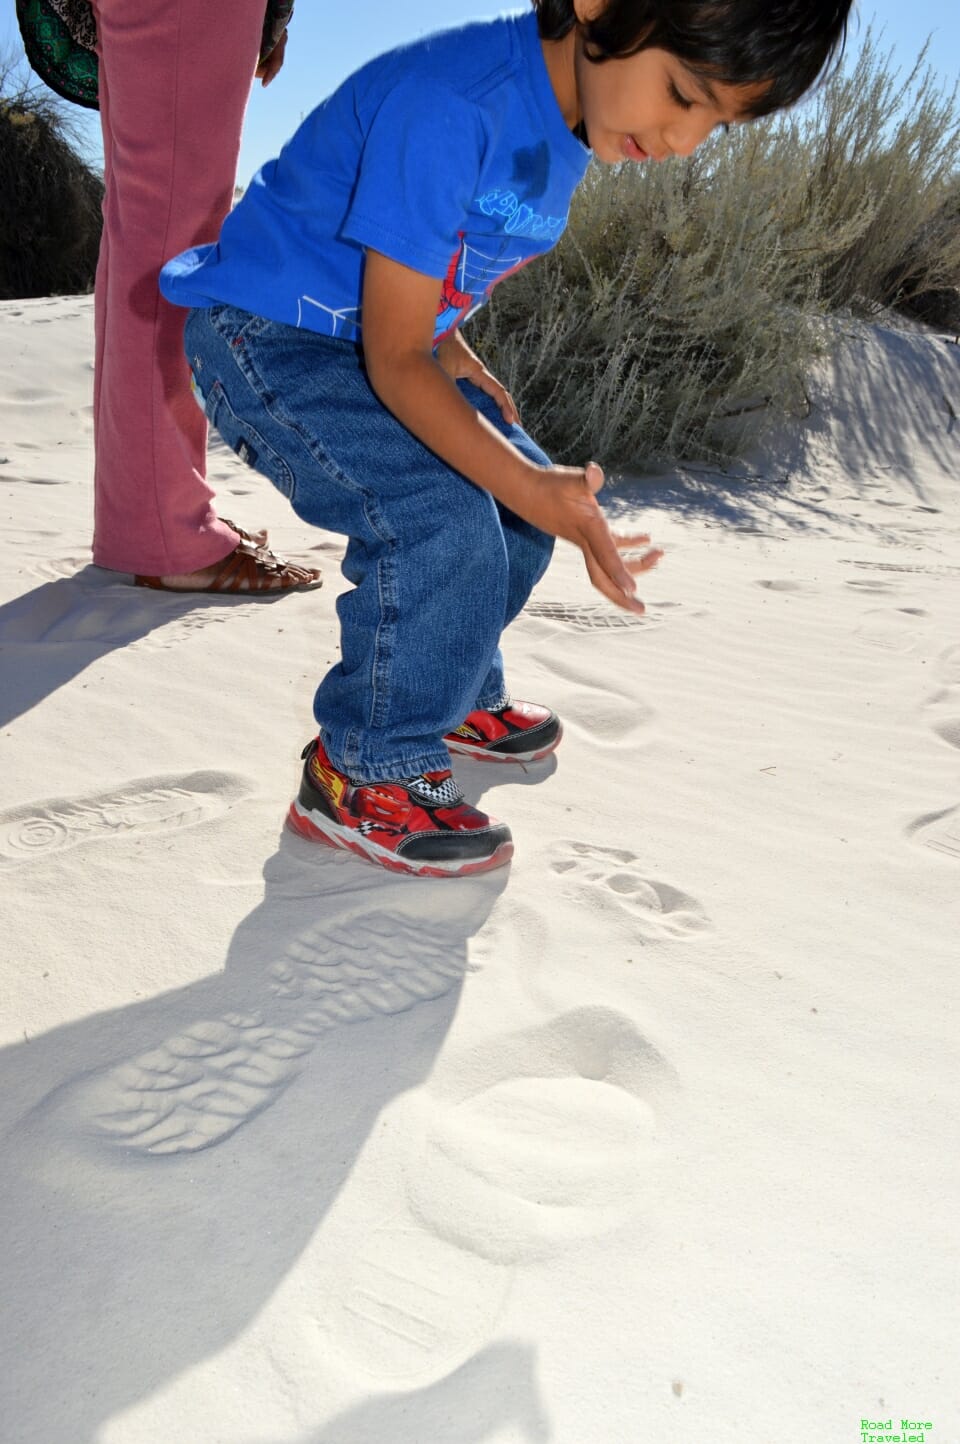 Ashok examining the sand